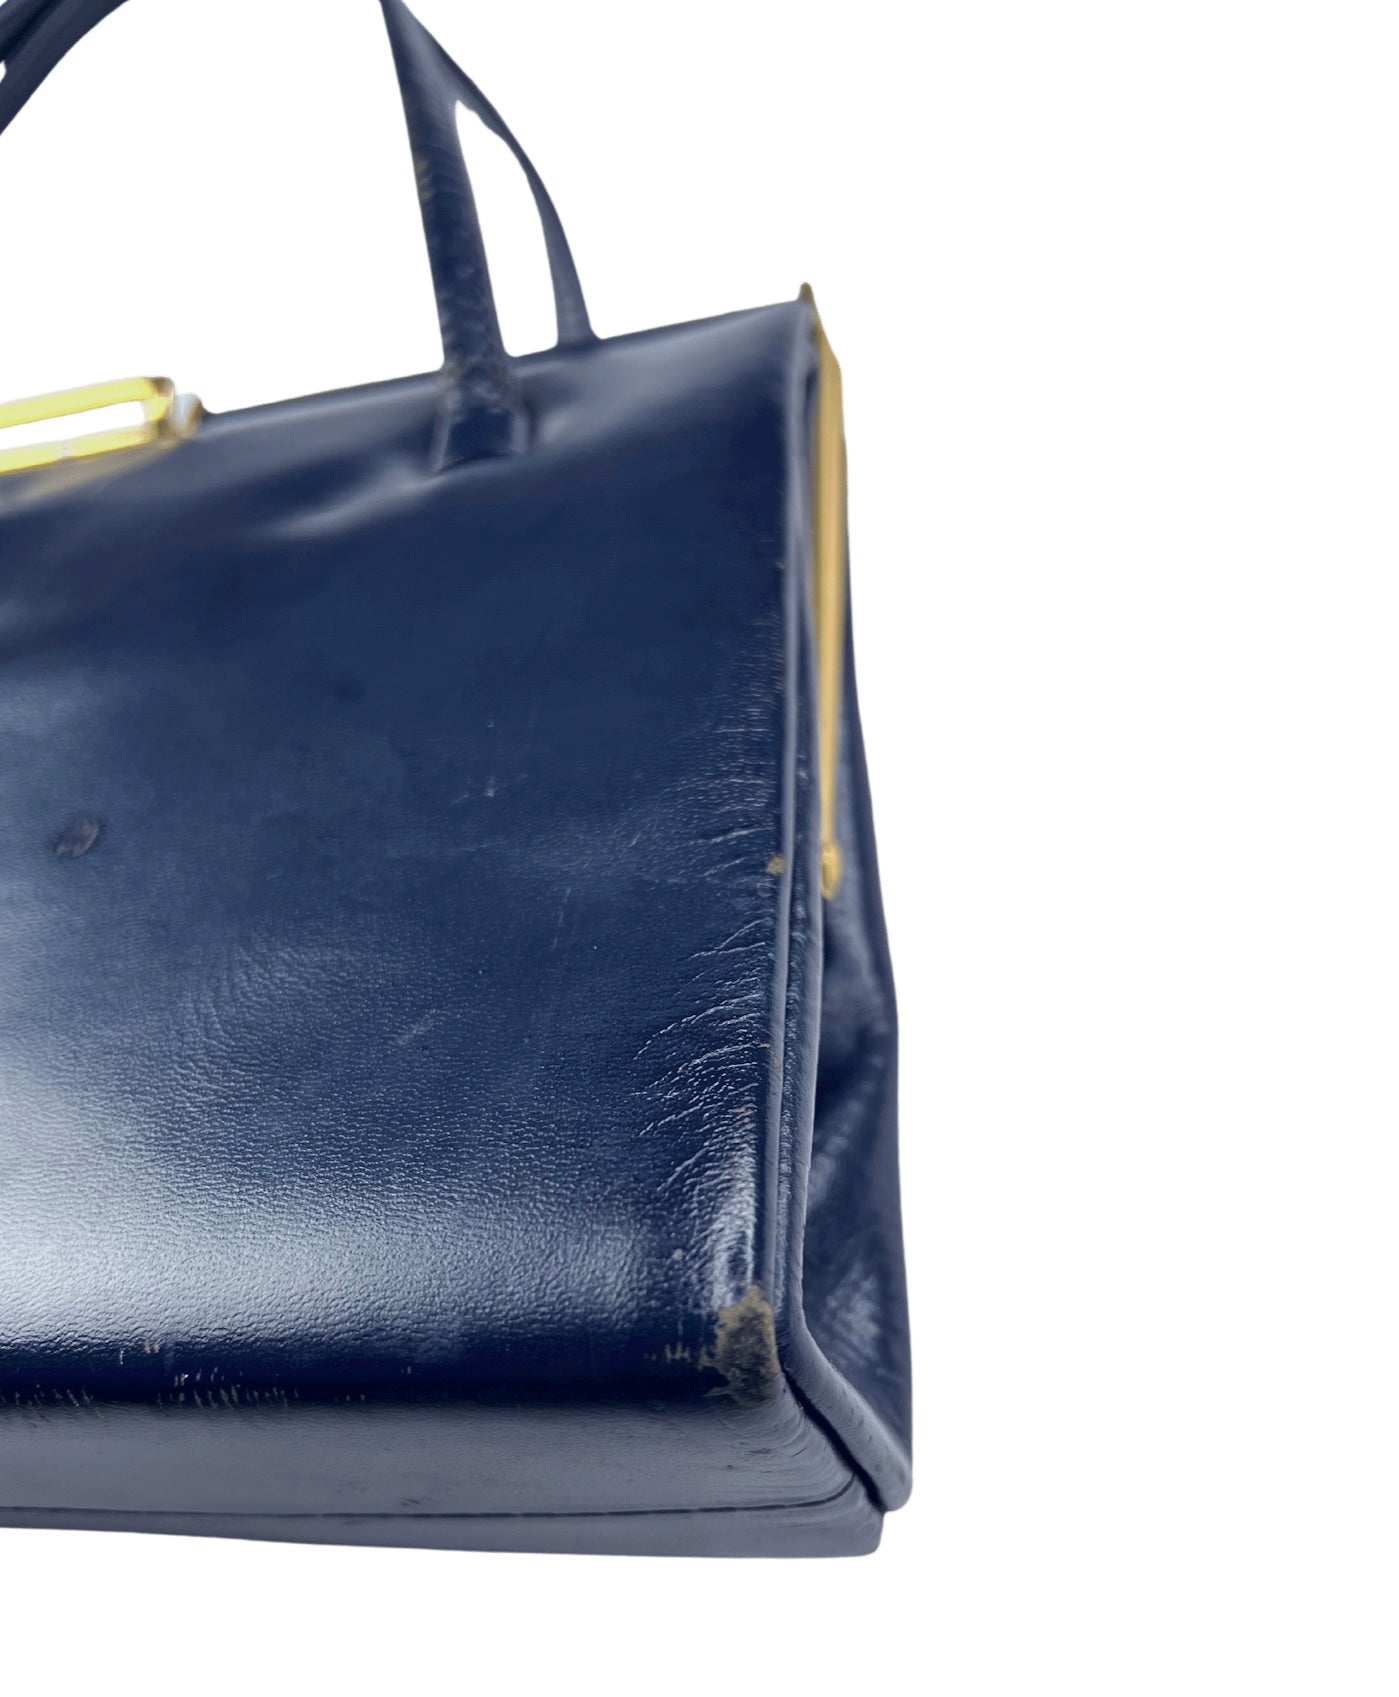 60’s Navy Leather Gold Clasp Handbag Purse